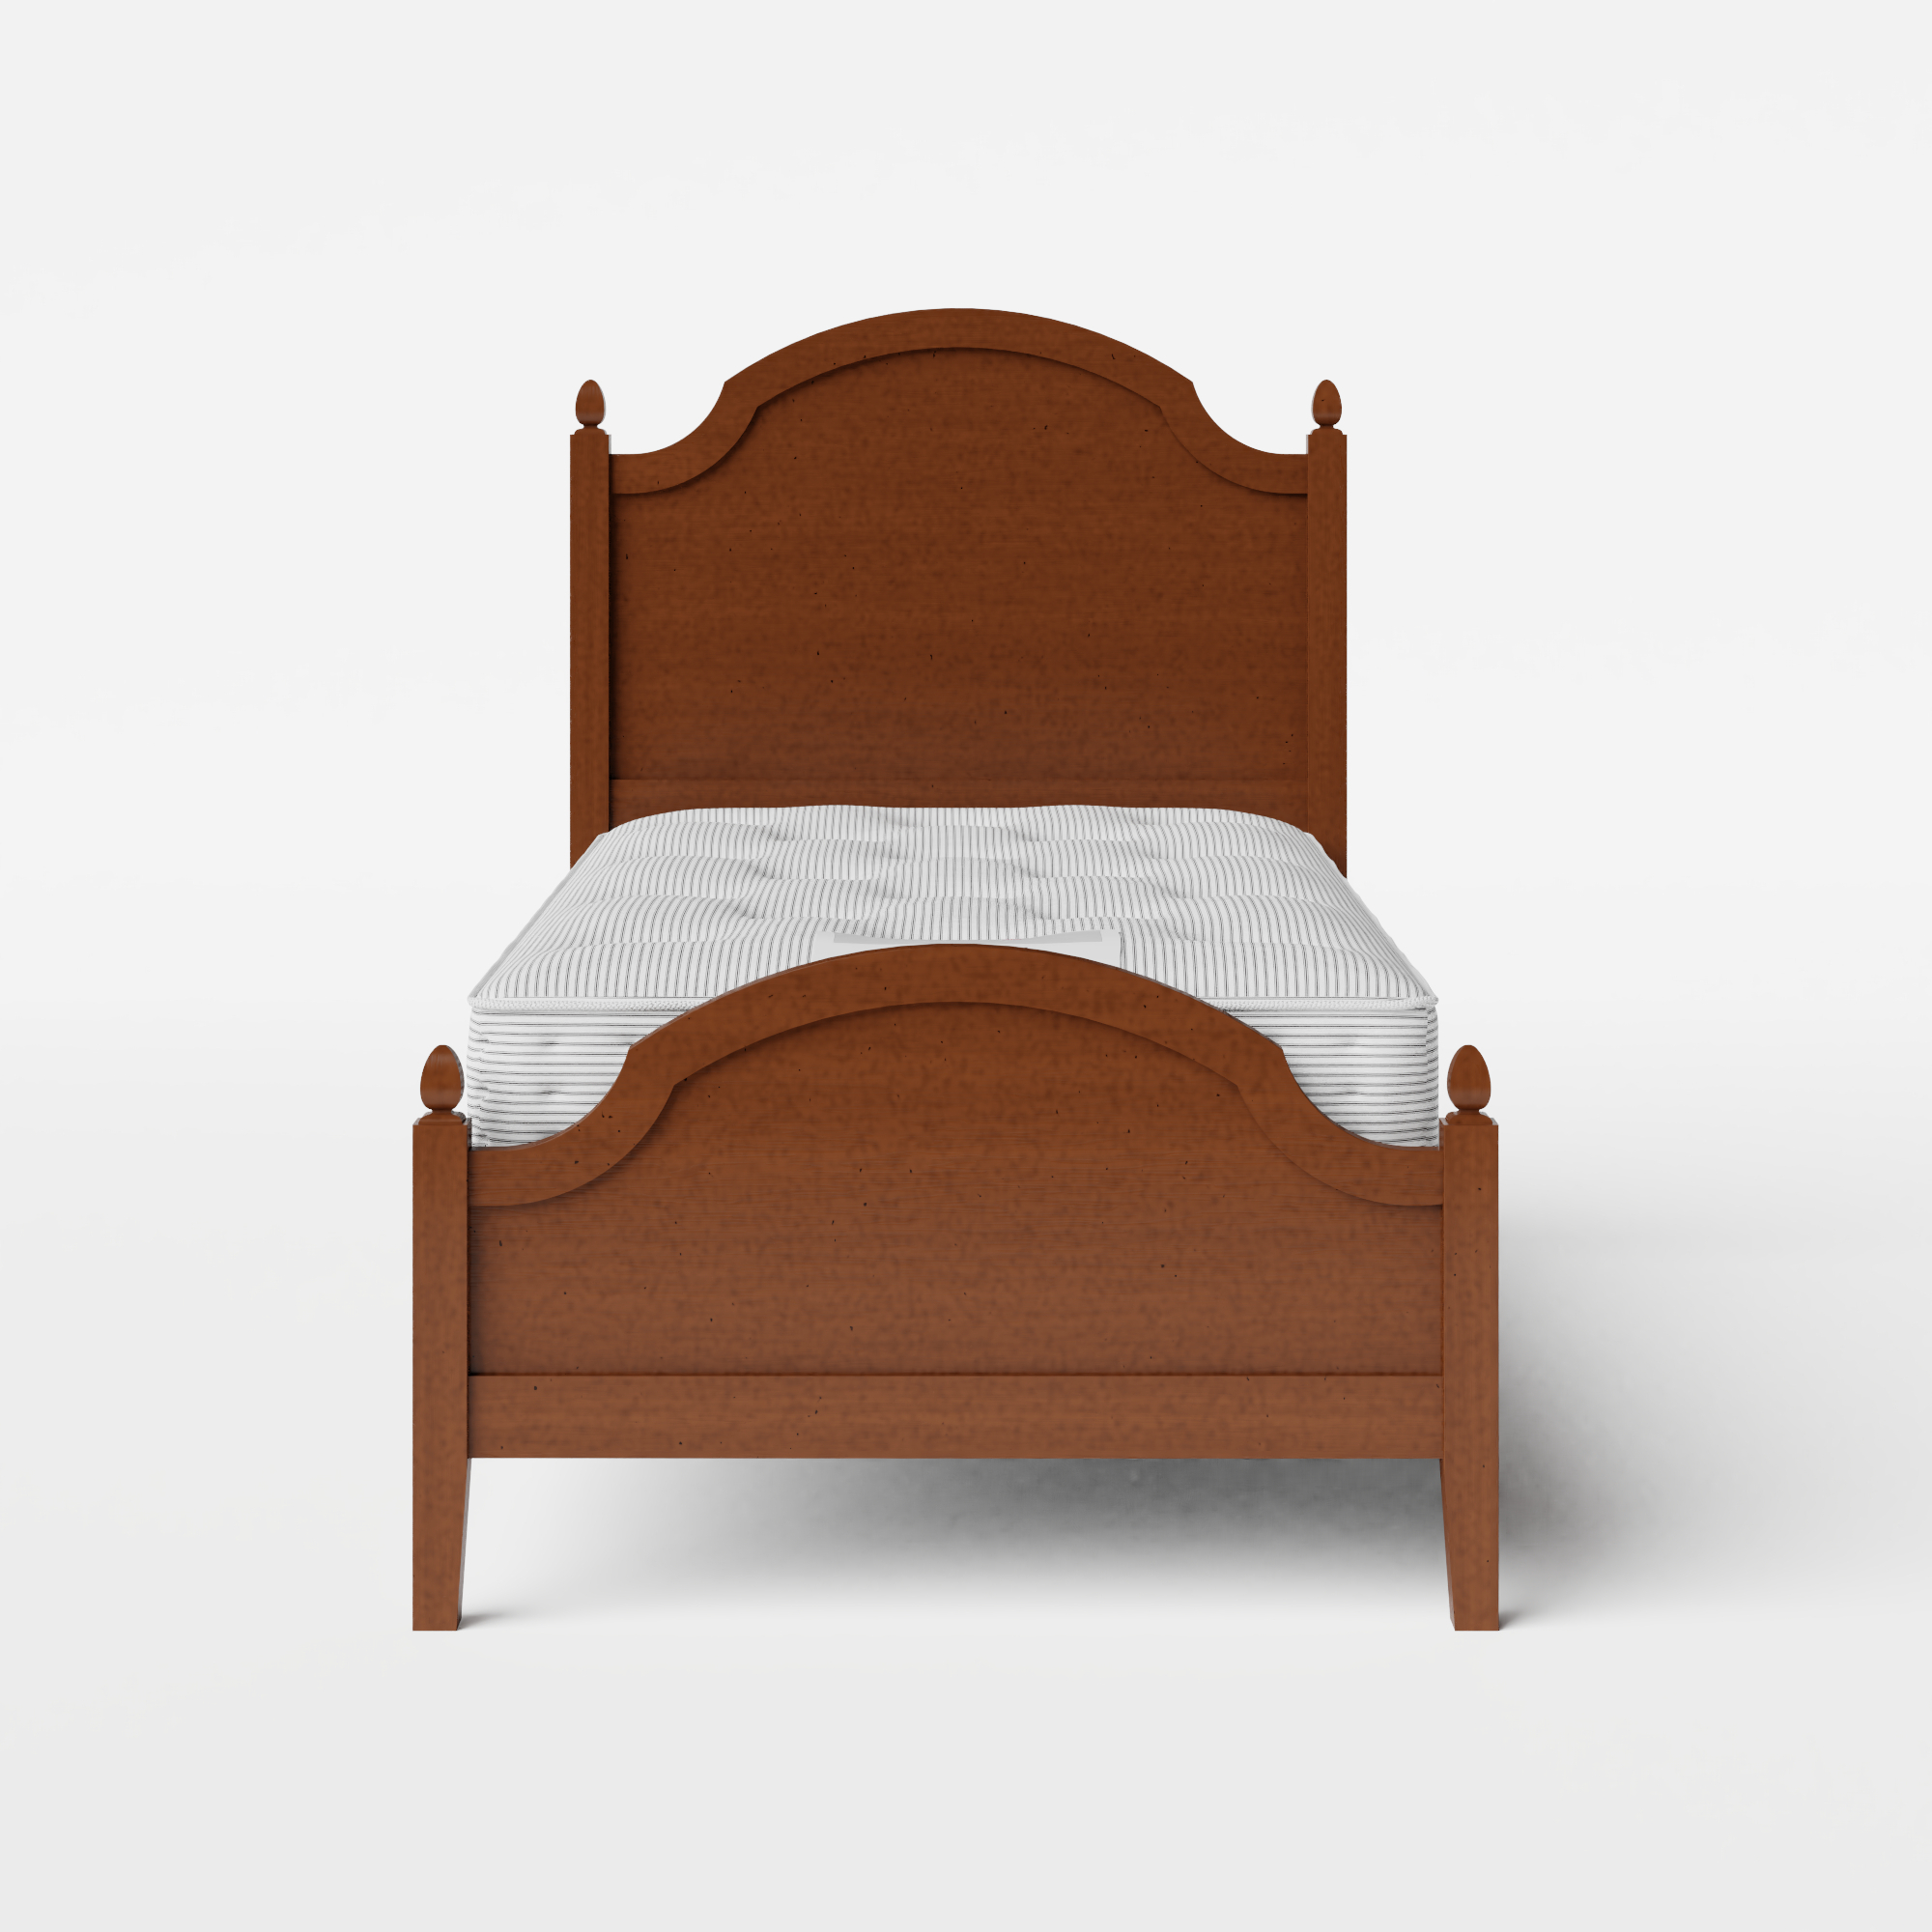 Kipling Low Footend single wood bed in dark cherry with Juno mattress